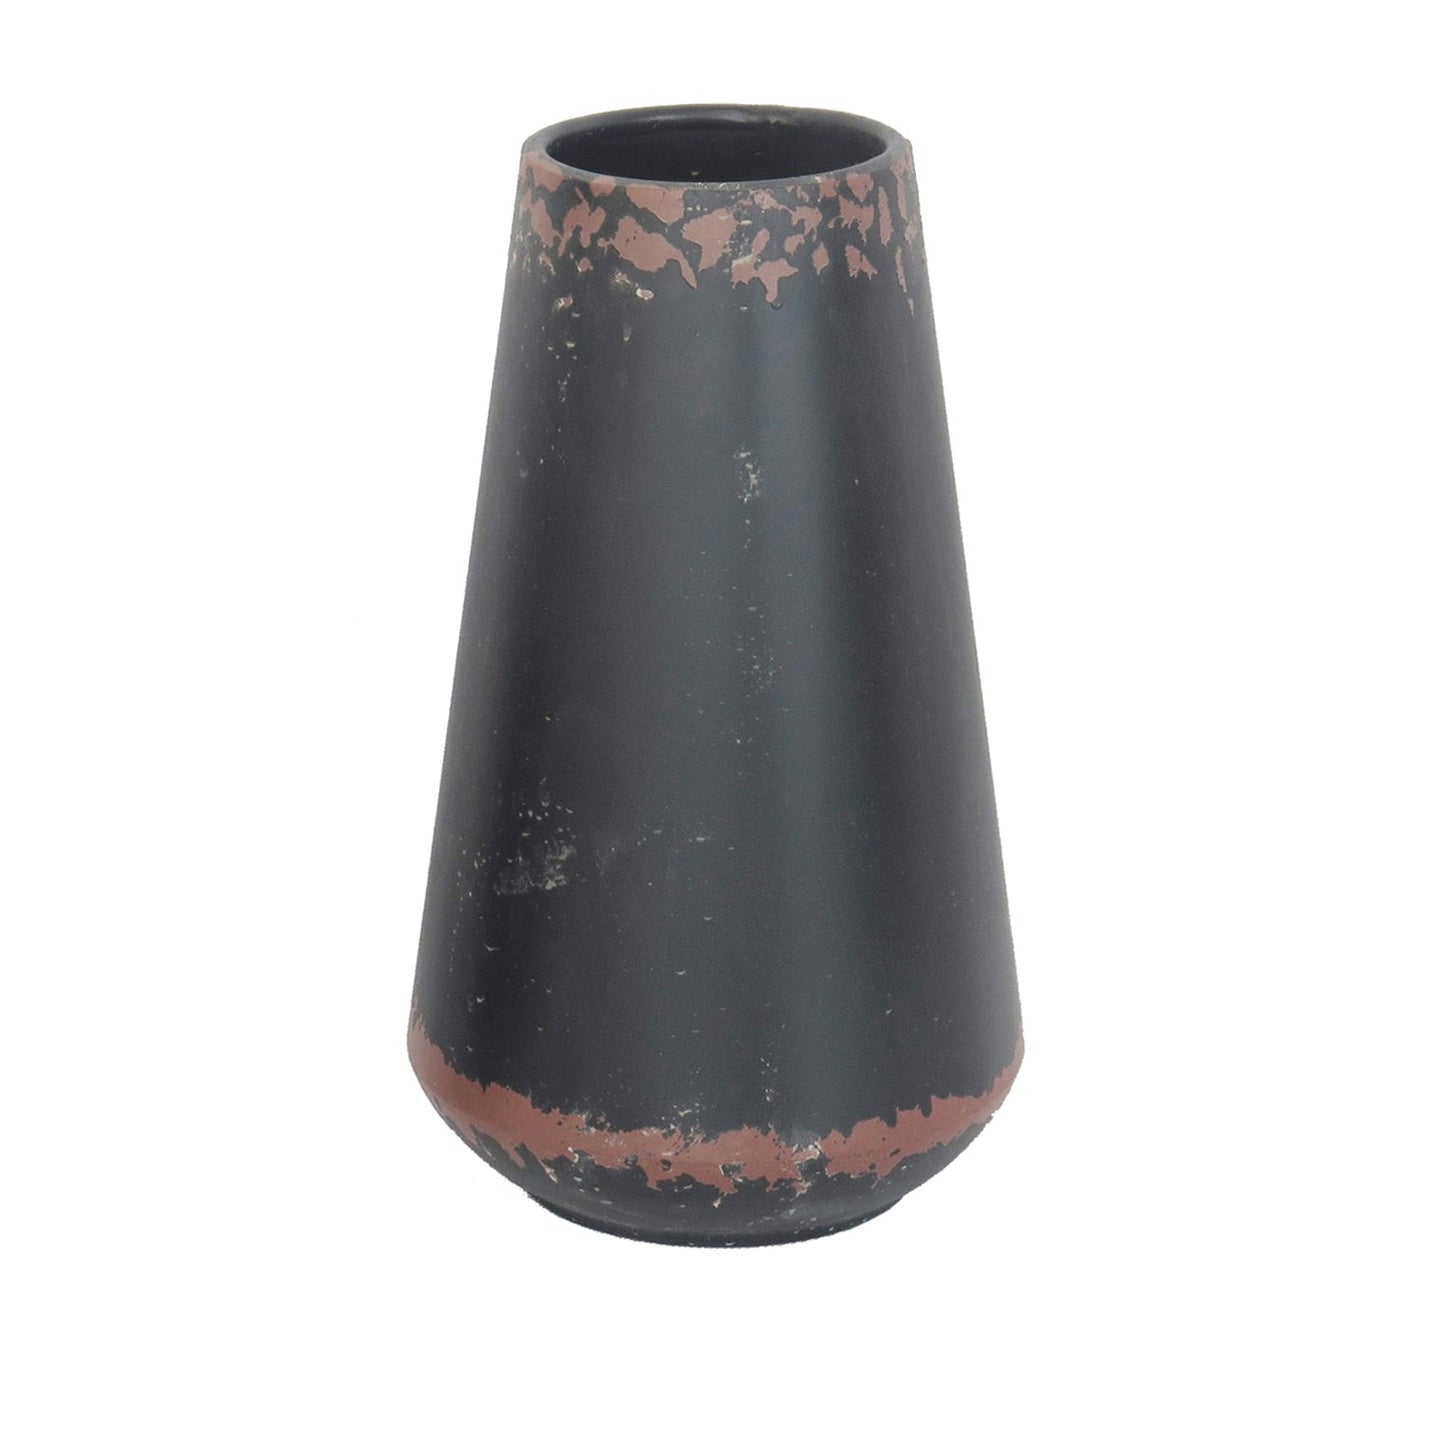 Crestview Collection Vase 2 8" x 14" Rustic Metal Vase In Rustic Black Finish